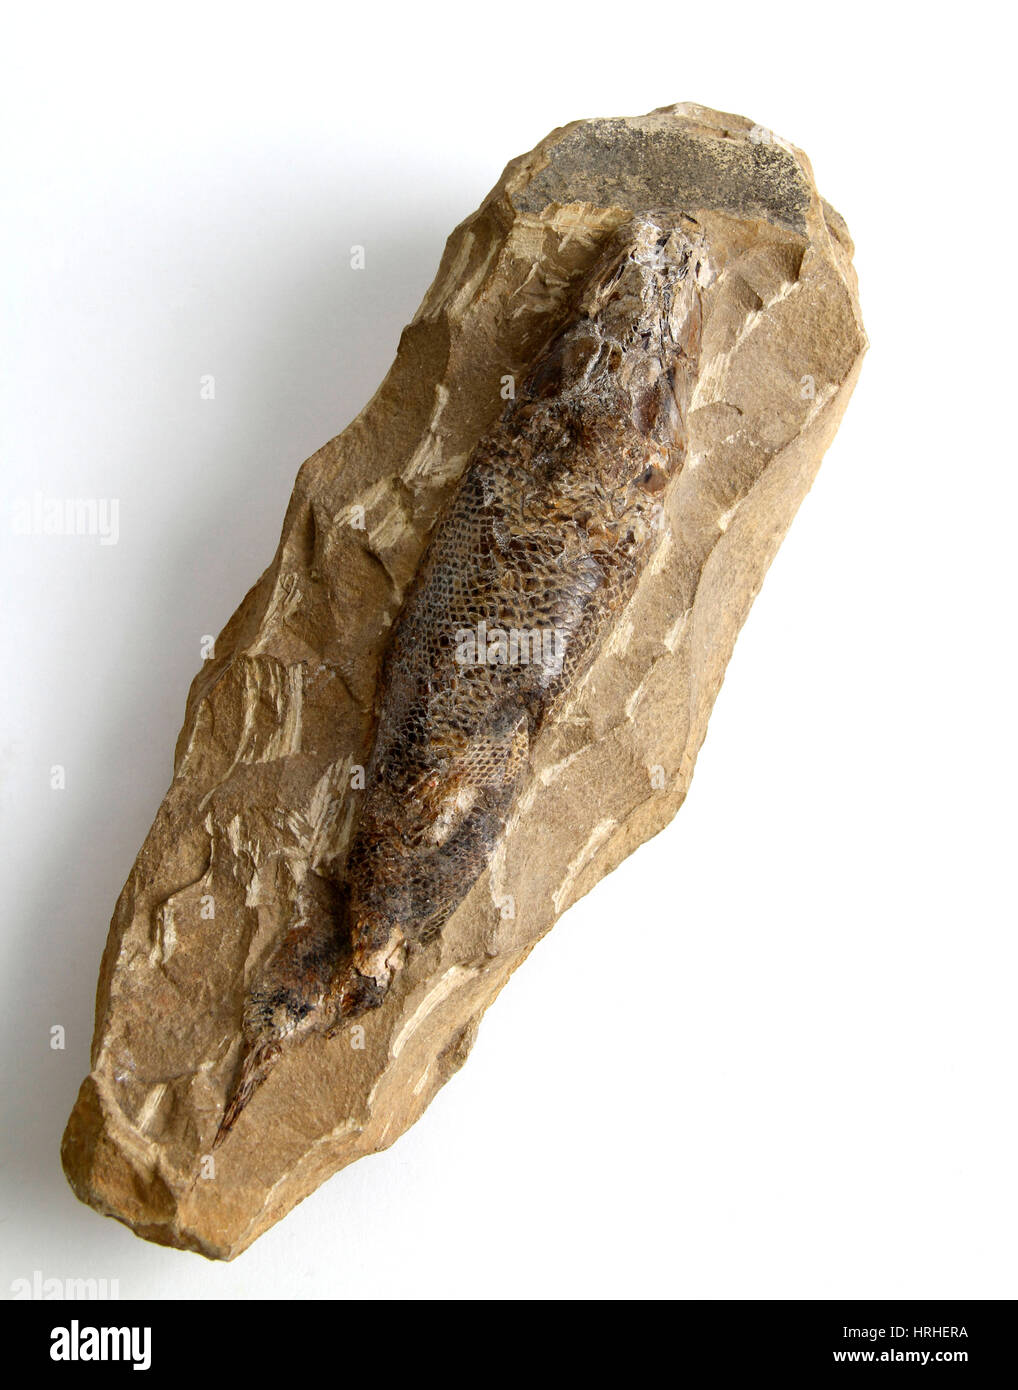 Peces fosilizados Foto de stock